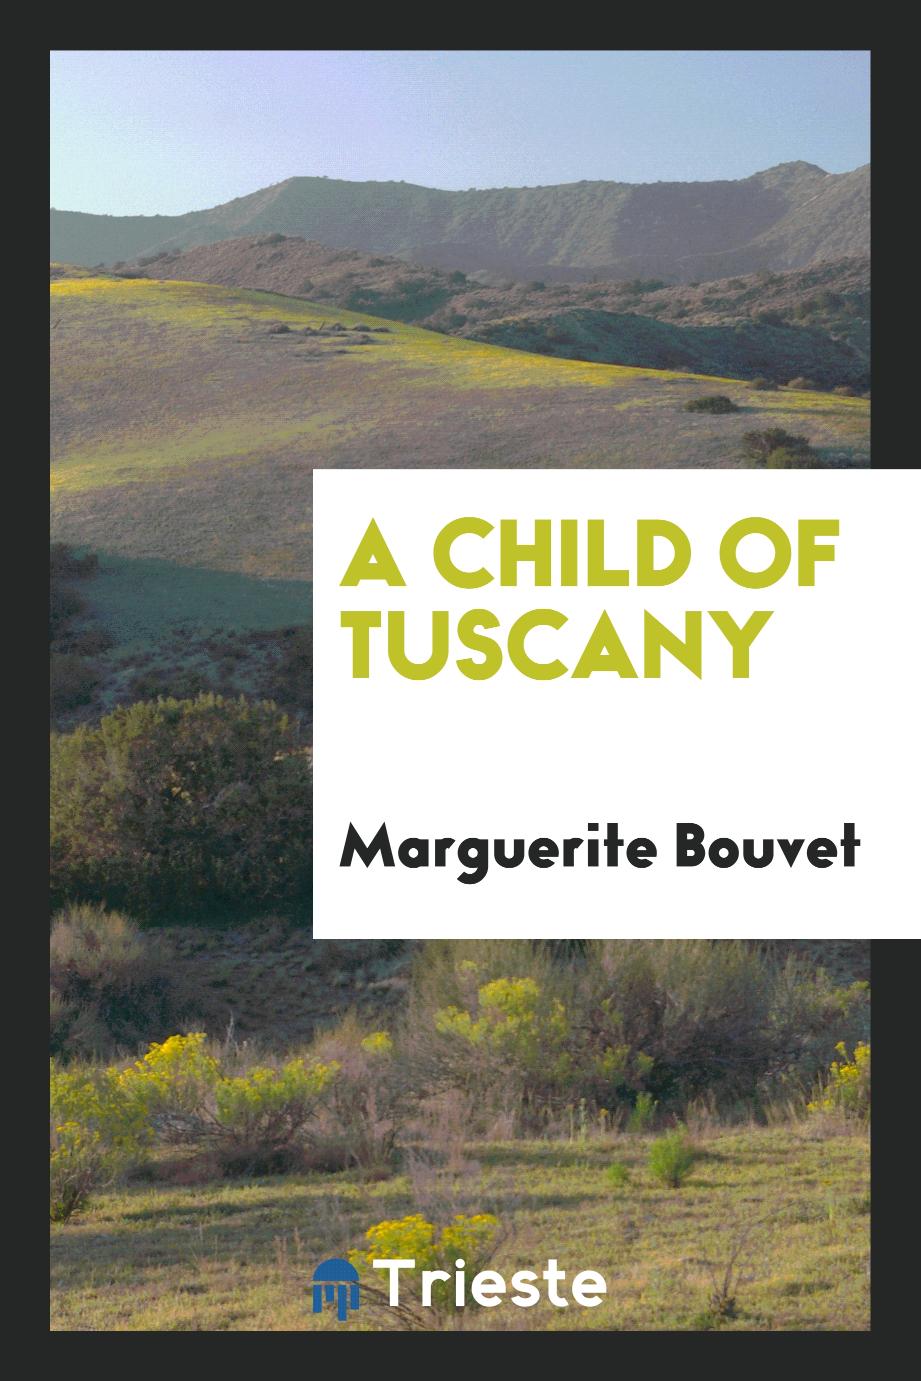 A child of Tuscany